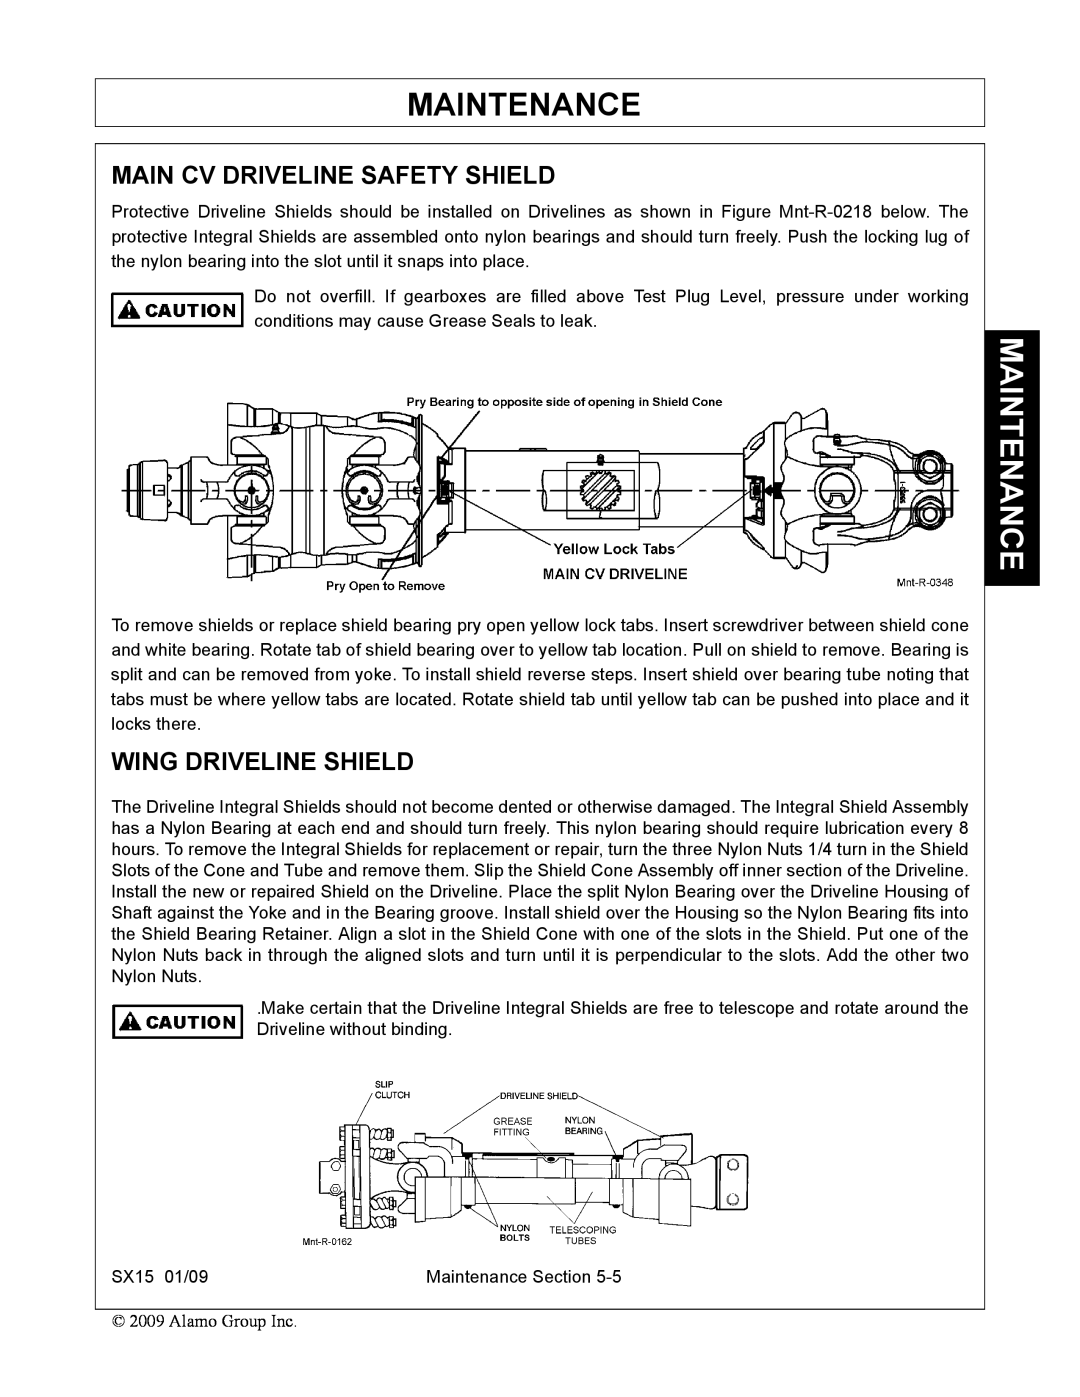 Alamo SX15 manual Main Cv Driveline Safety Shield, Wing Driveline Shield, Maintenance 